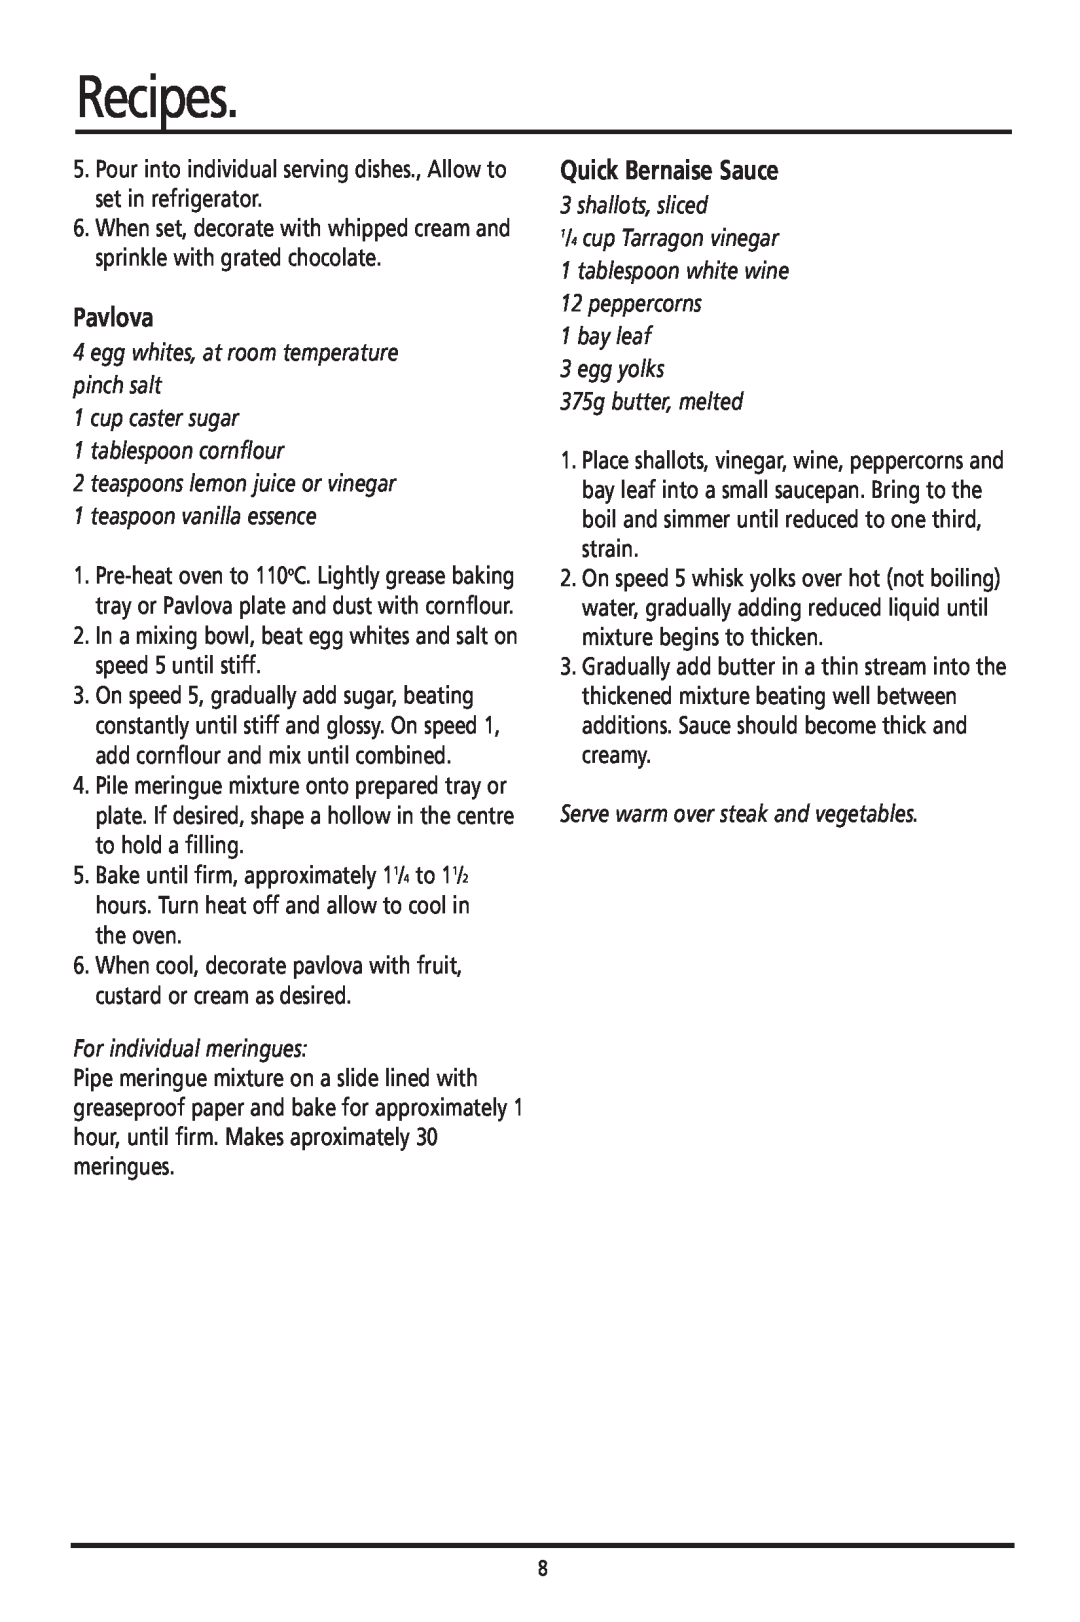 Sunbeam JM3200 manual Pavlova, Quick Bernaise Sauce, egg whites, at room temperature pinch salt 1 cup caster sugar, Recipes 